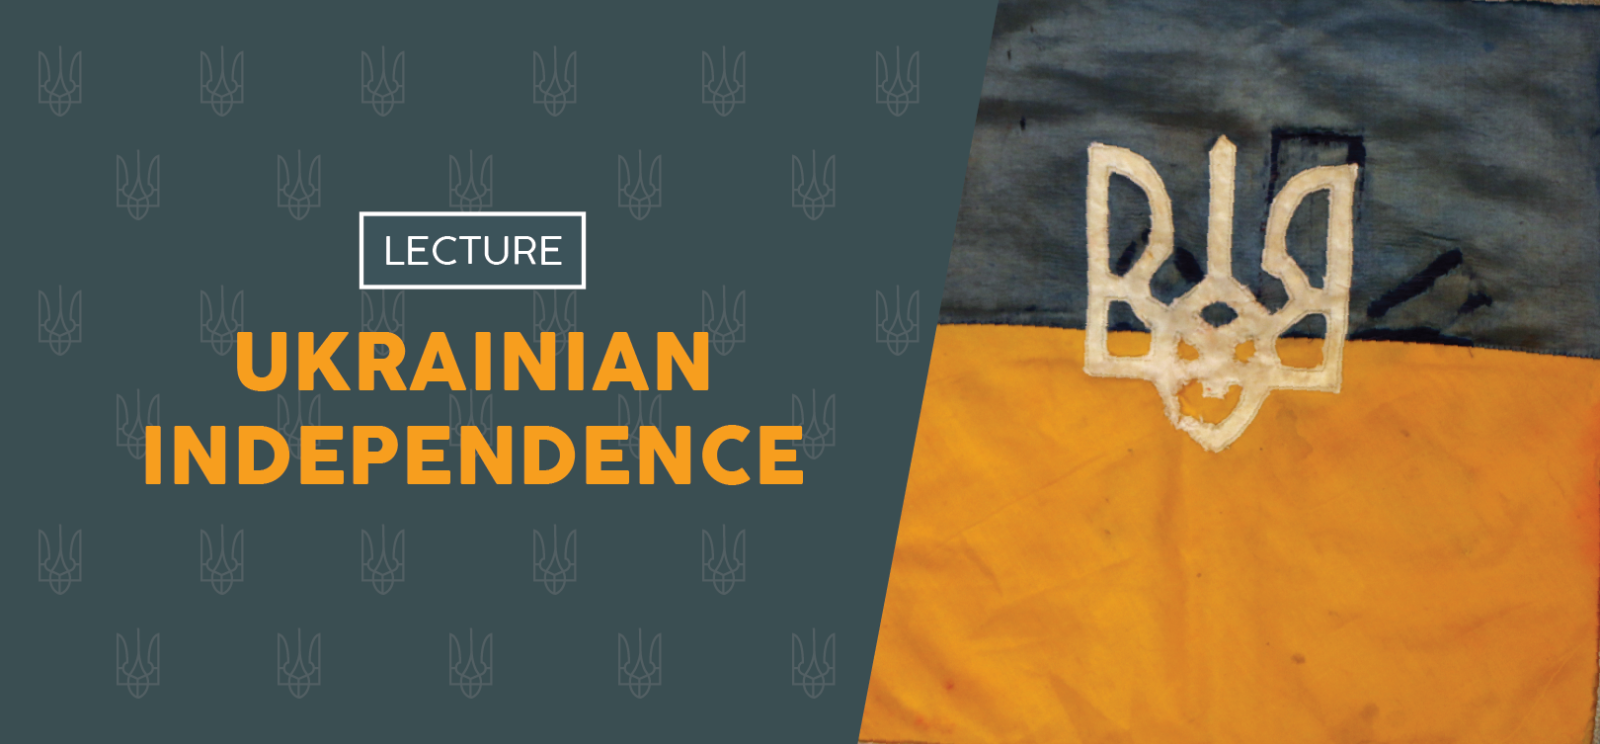 Image: Ukrainian flag. Text: Lecture / Ukrainian Independence